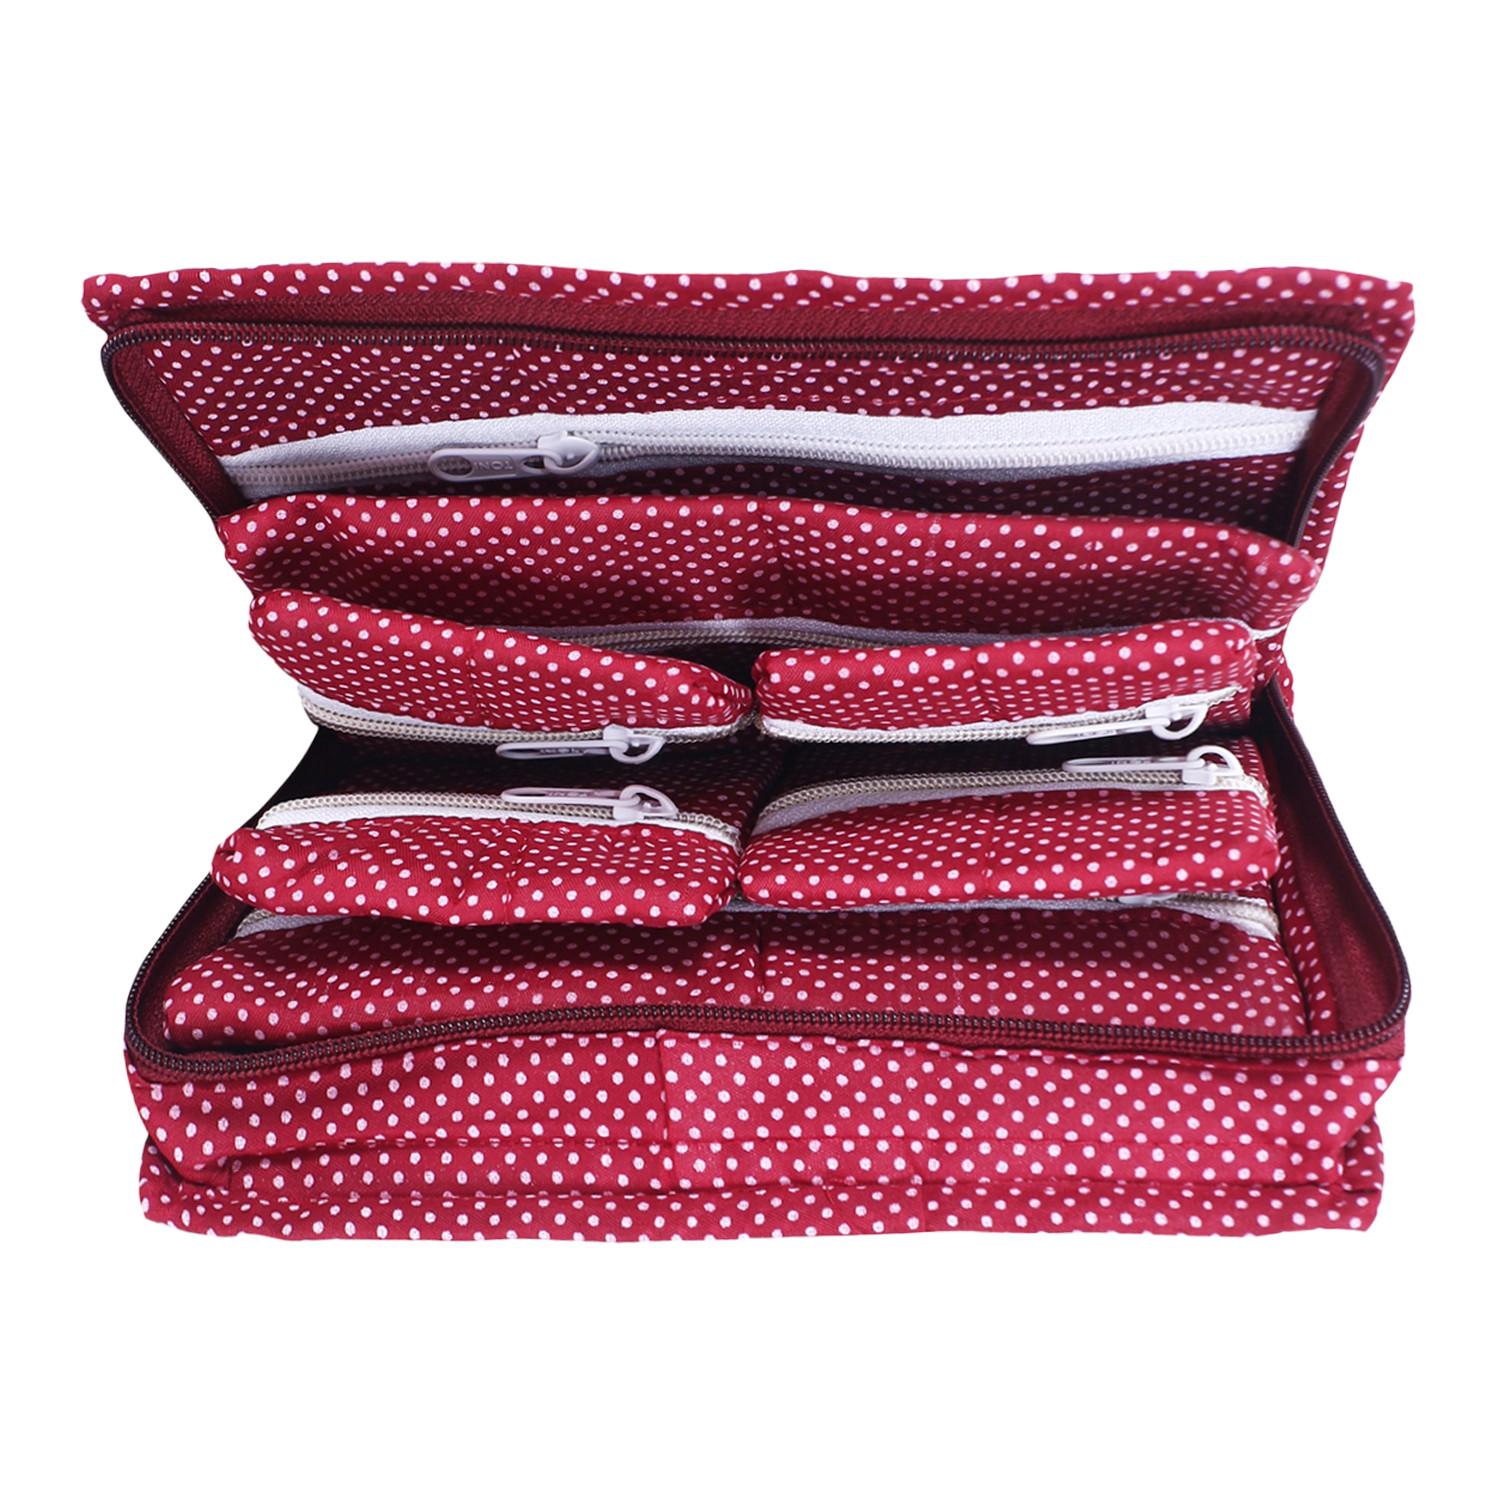 Kuber Industries Jewellery Kit | Cotton Bow Dot Print Travel Kit | 7 Pouch Jewellery Storage Kit | Makeup Organizer for Woman | Maroon